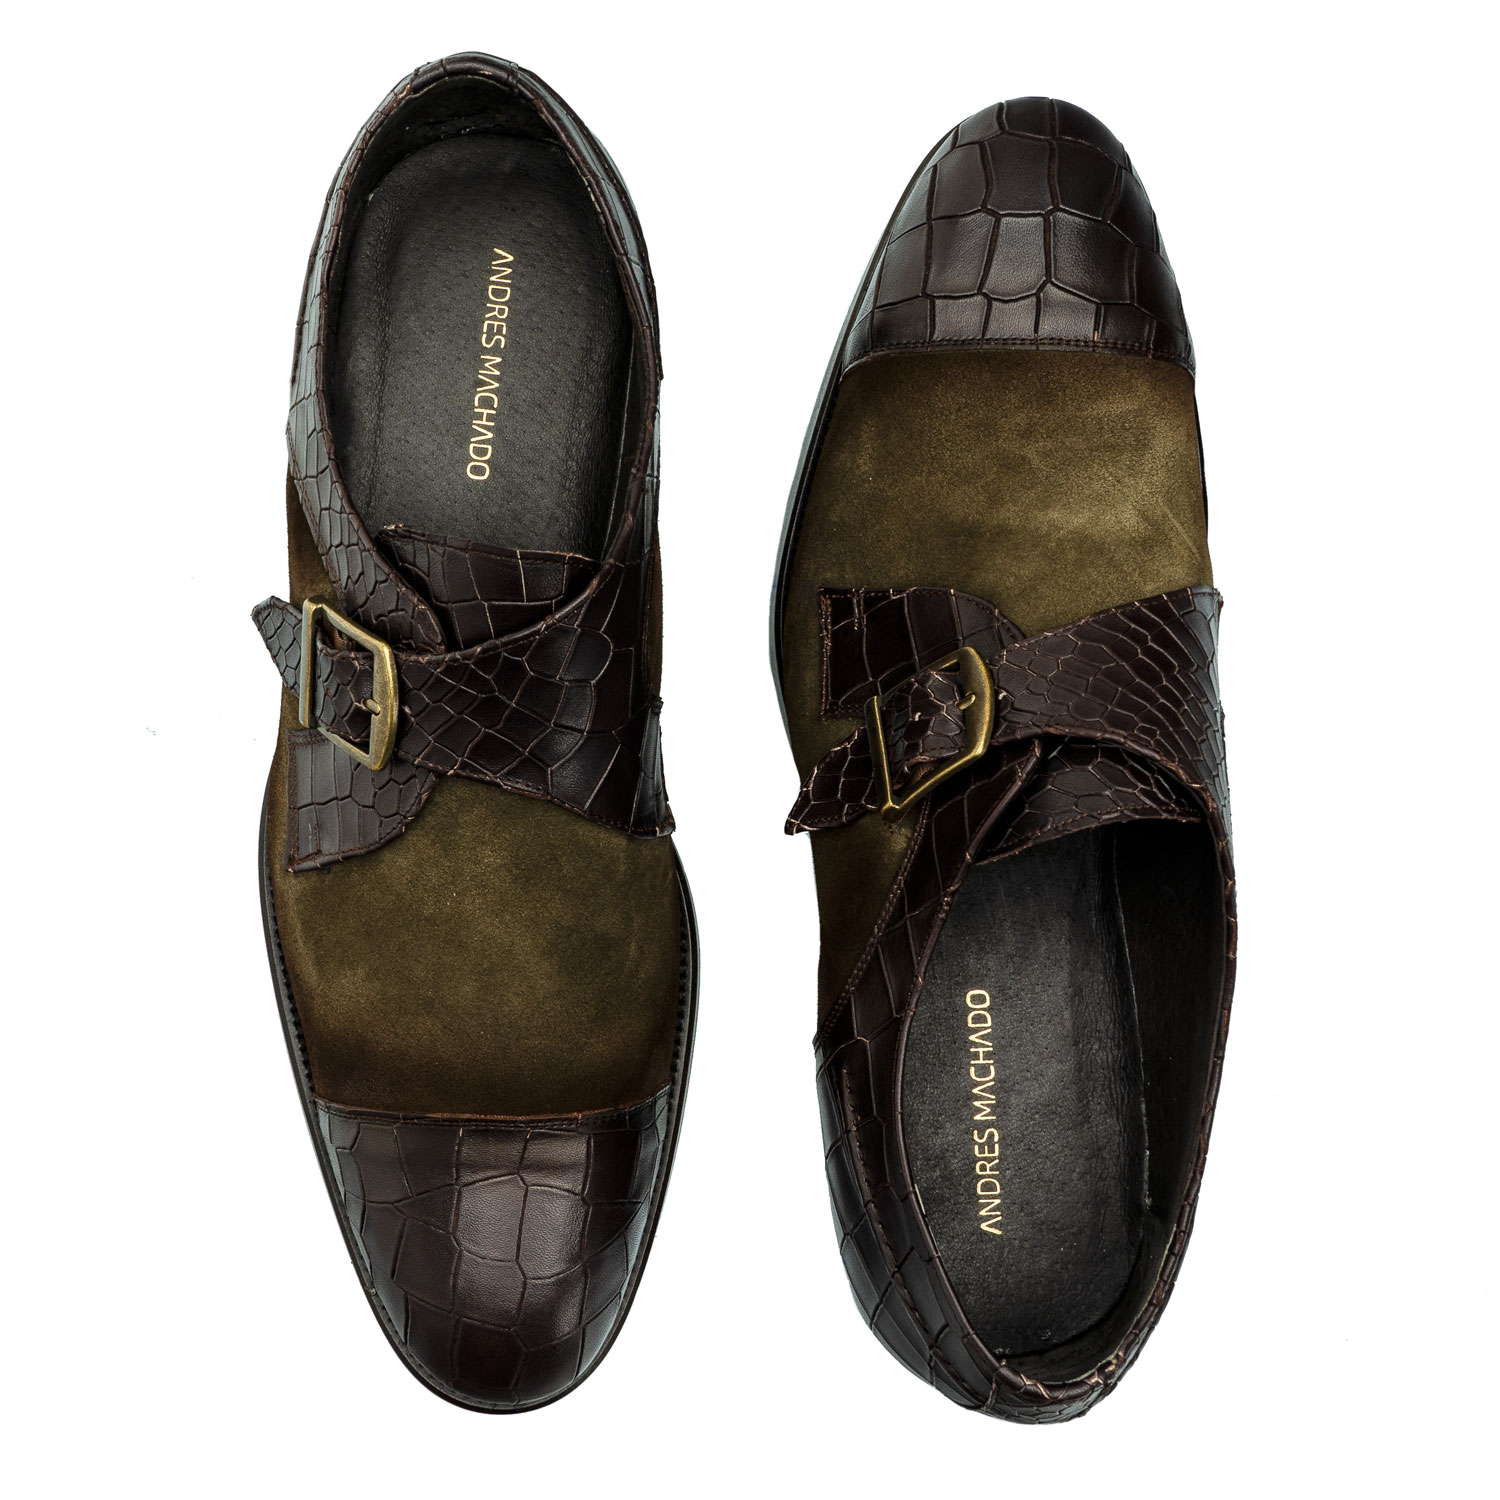 Men's Monk Shoes in Croc Split leather 